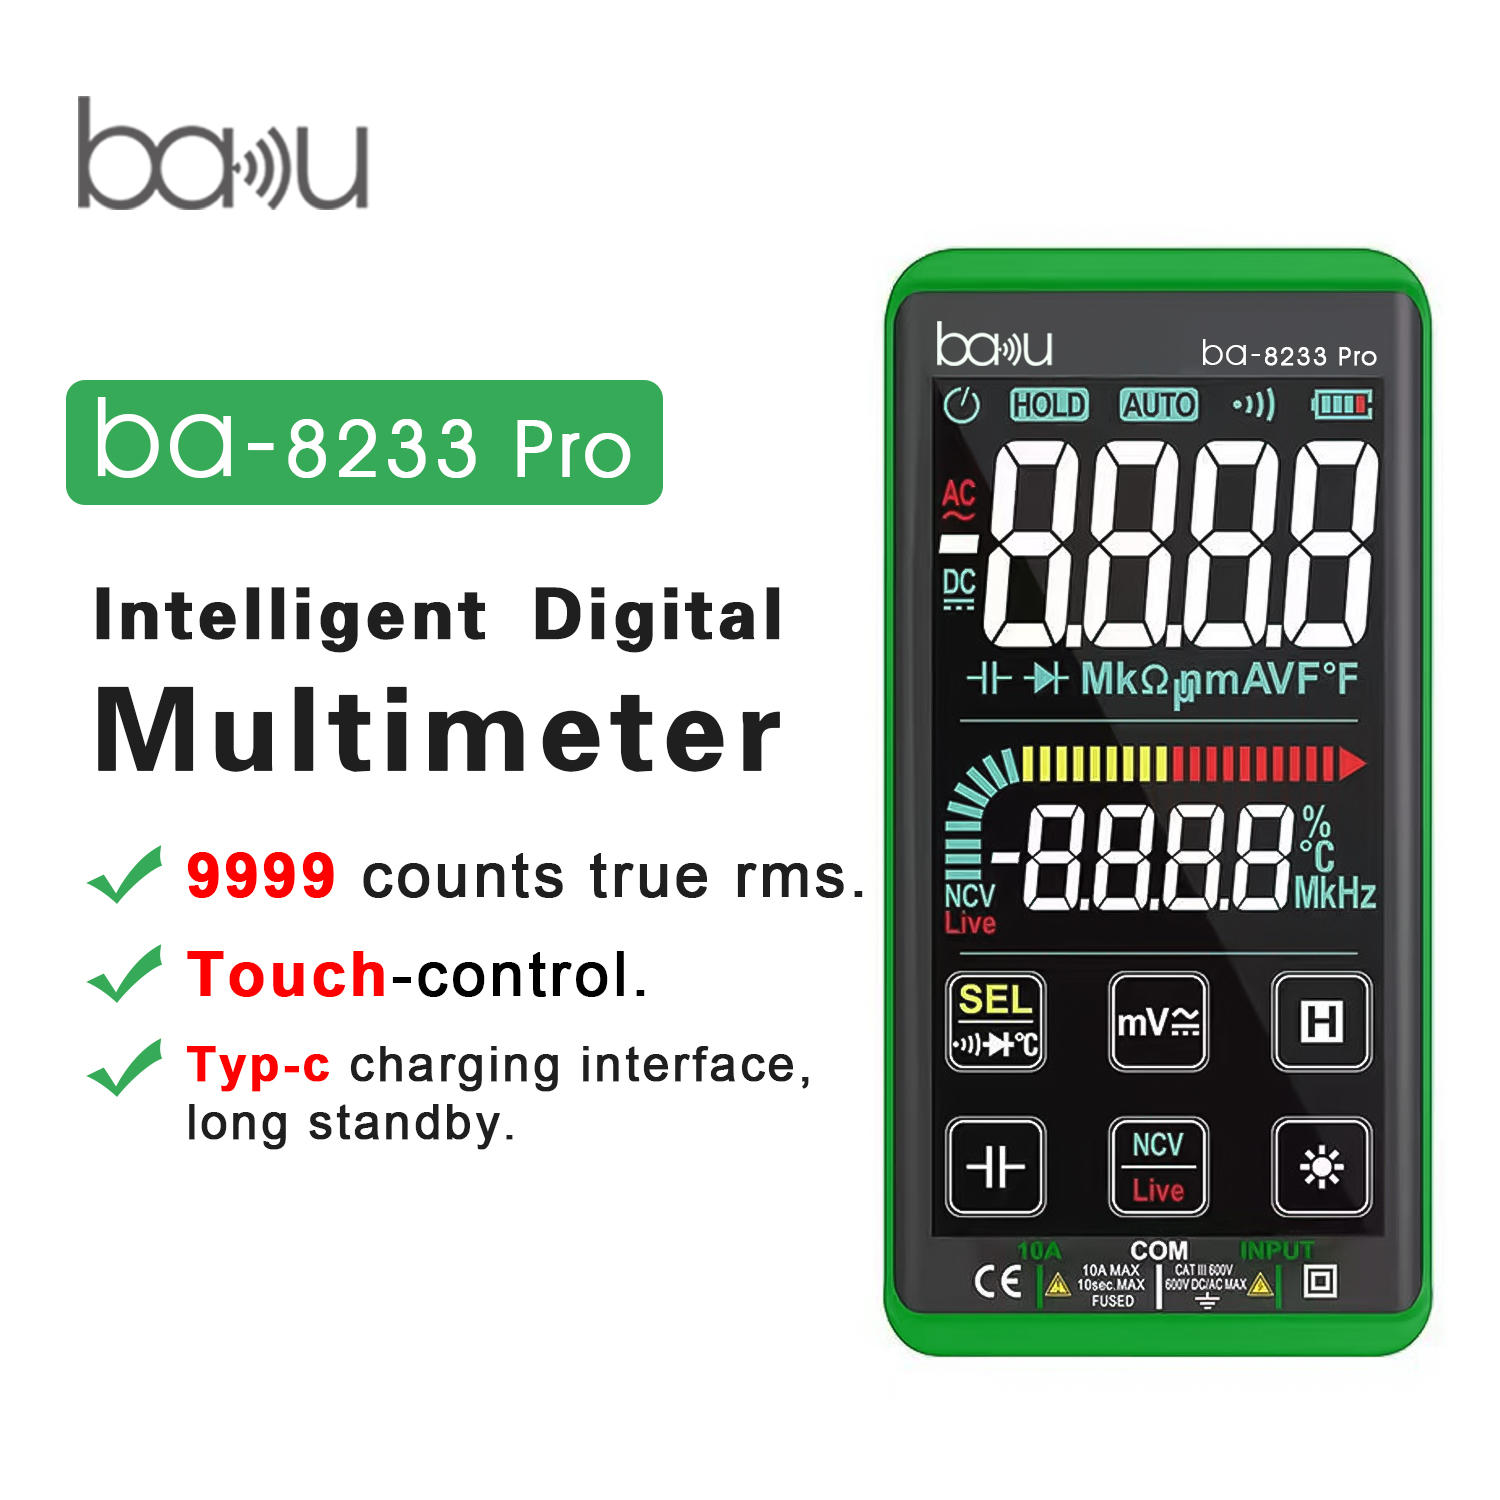 BAKU Hot selling Touch-control ba-8233 Pro Intelligent Digital Multimeter